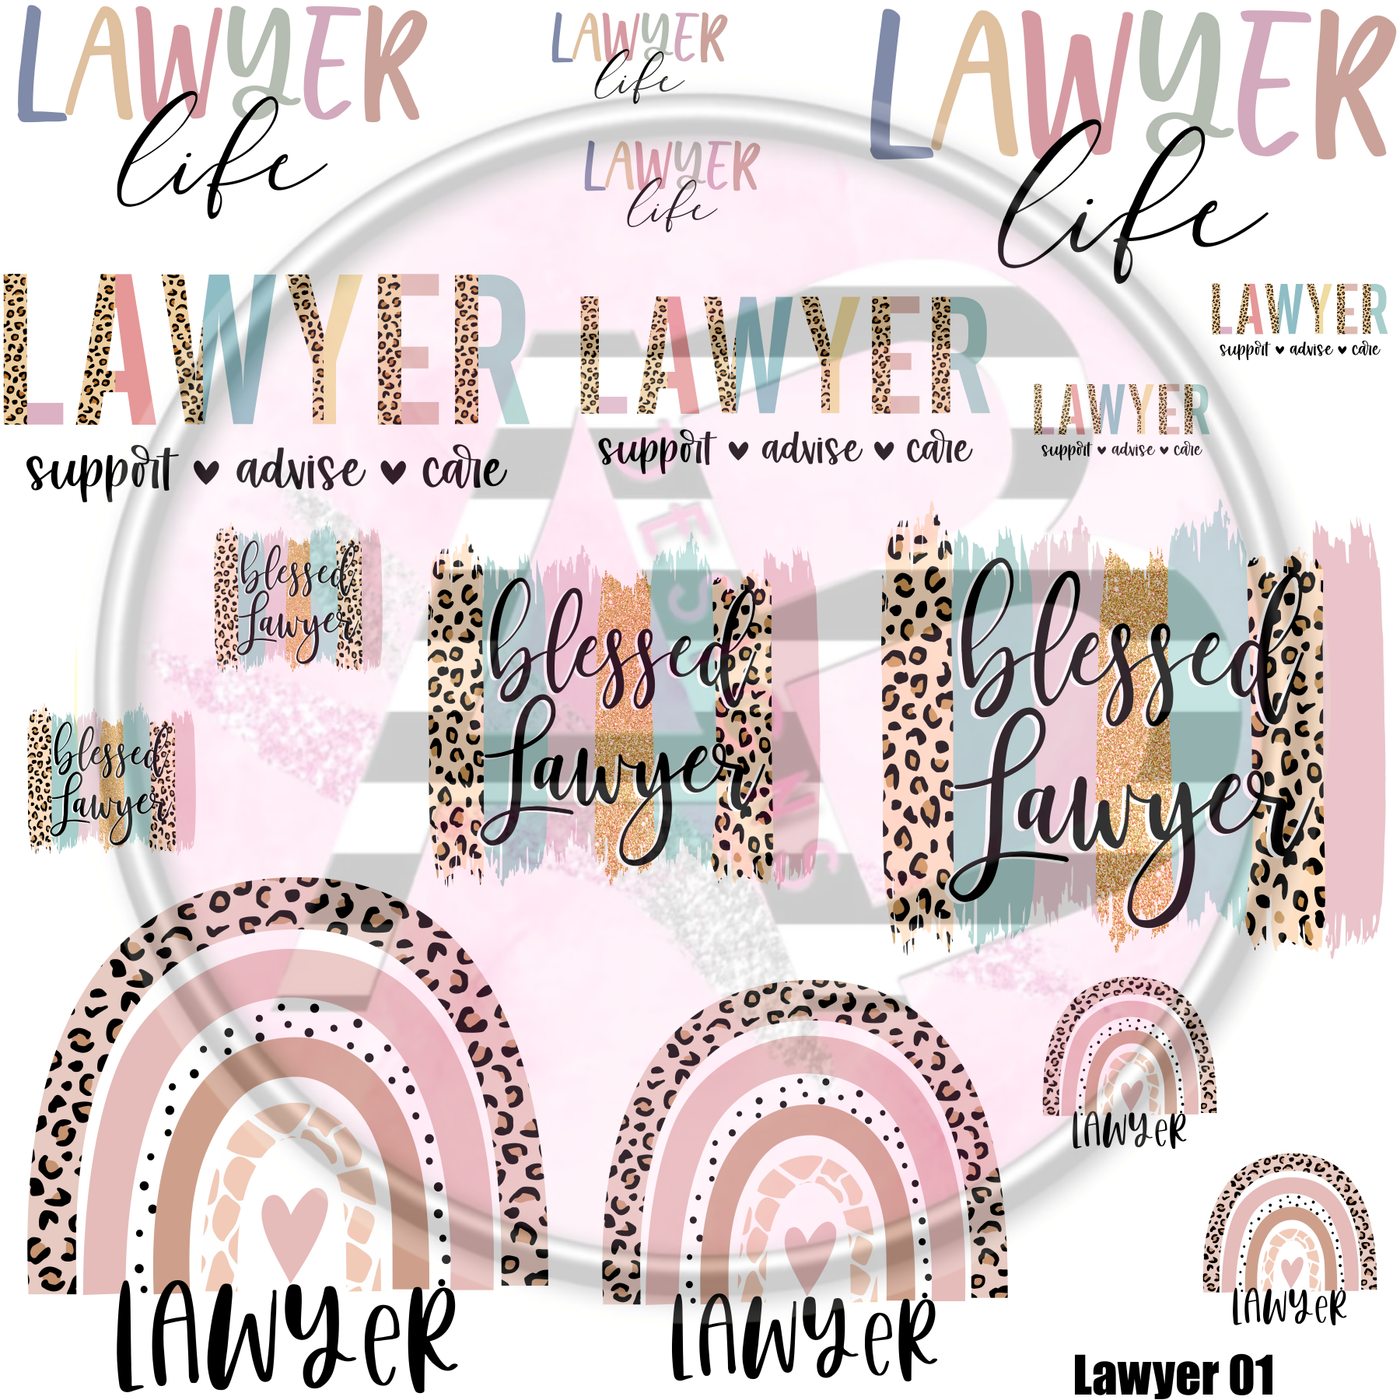 Lawyer 01 12 x 12 Clear Cast Full Sheet